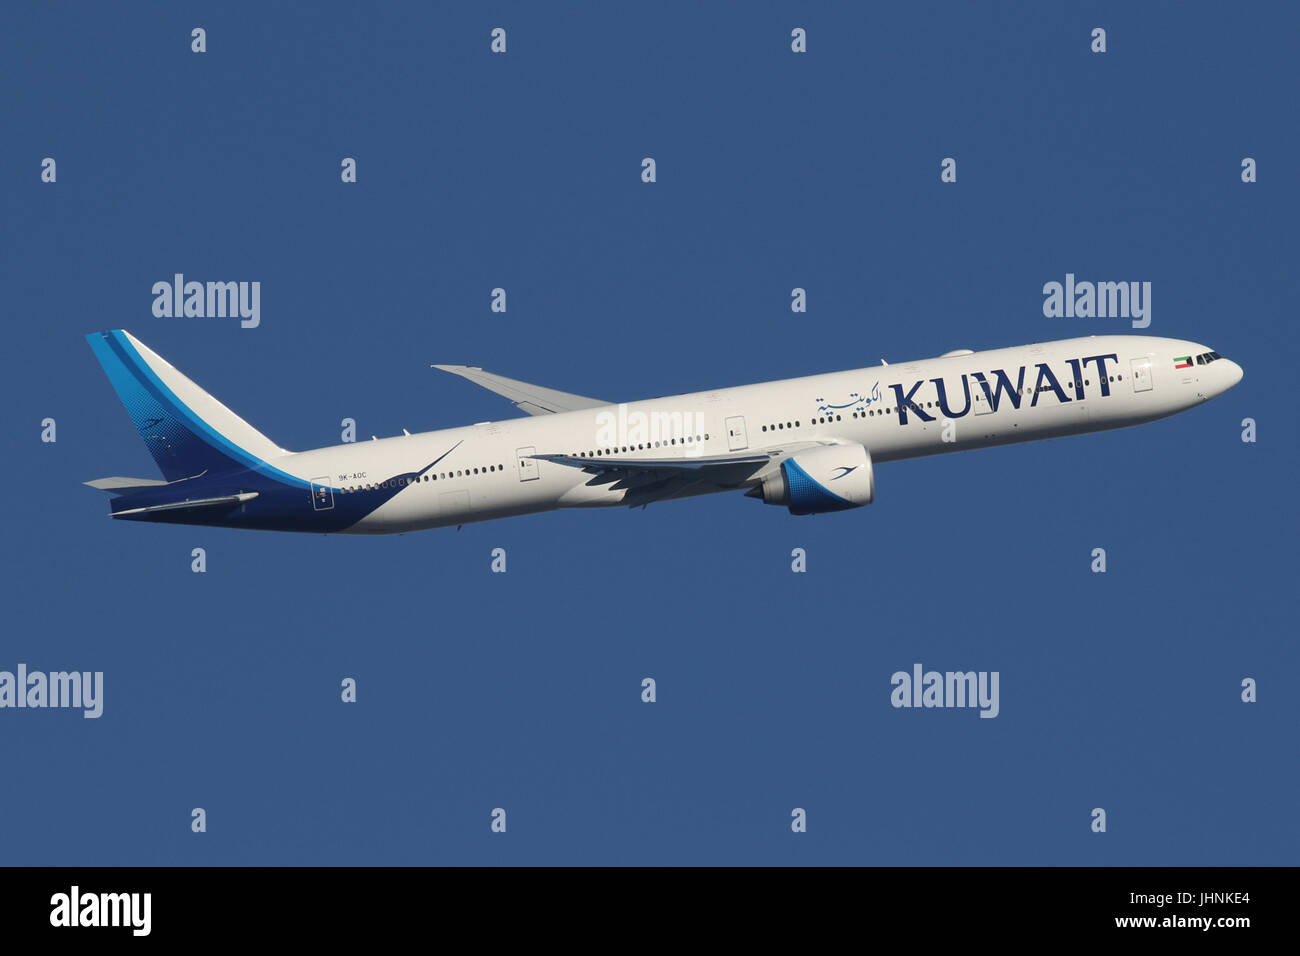 KUWAIT 777 Stock Photo